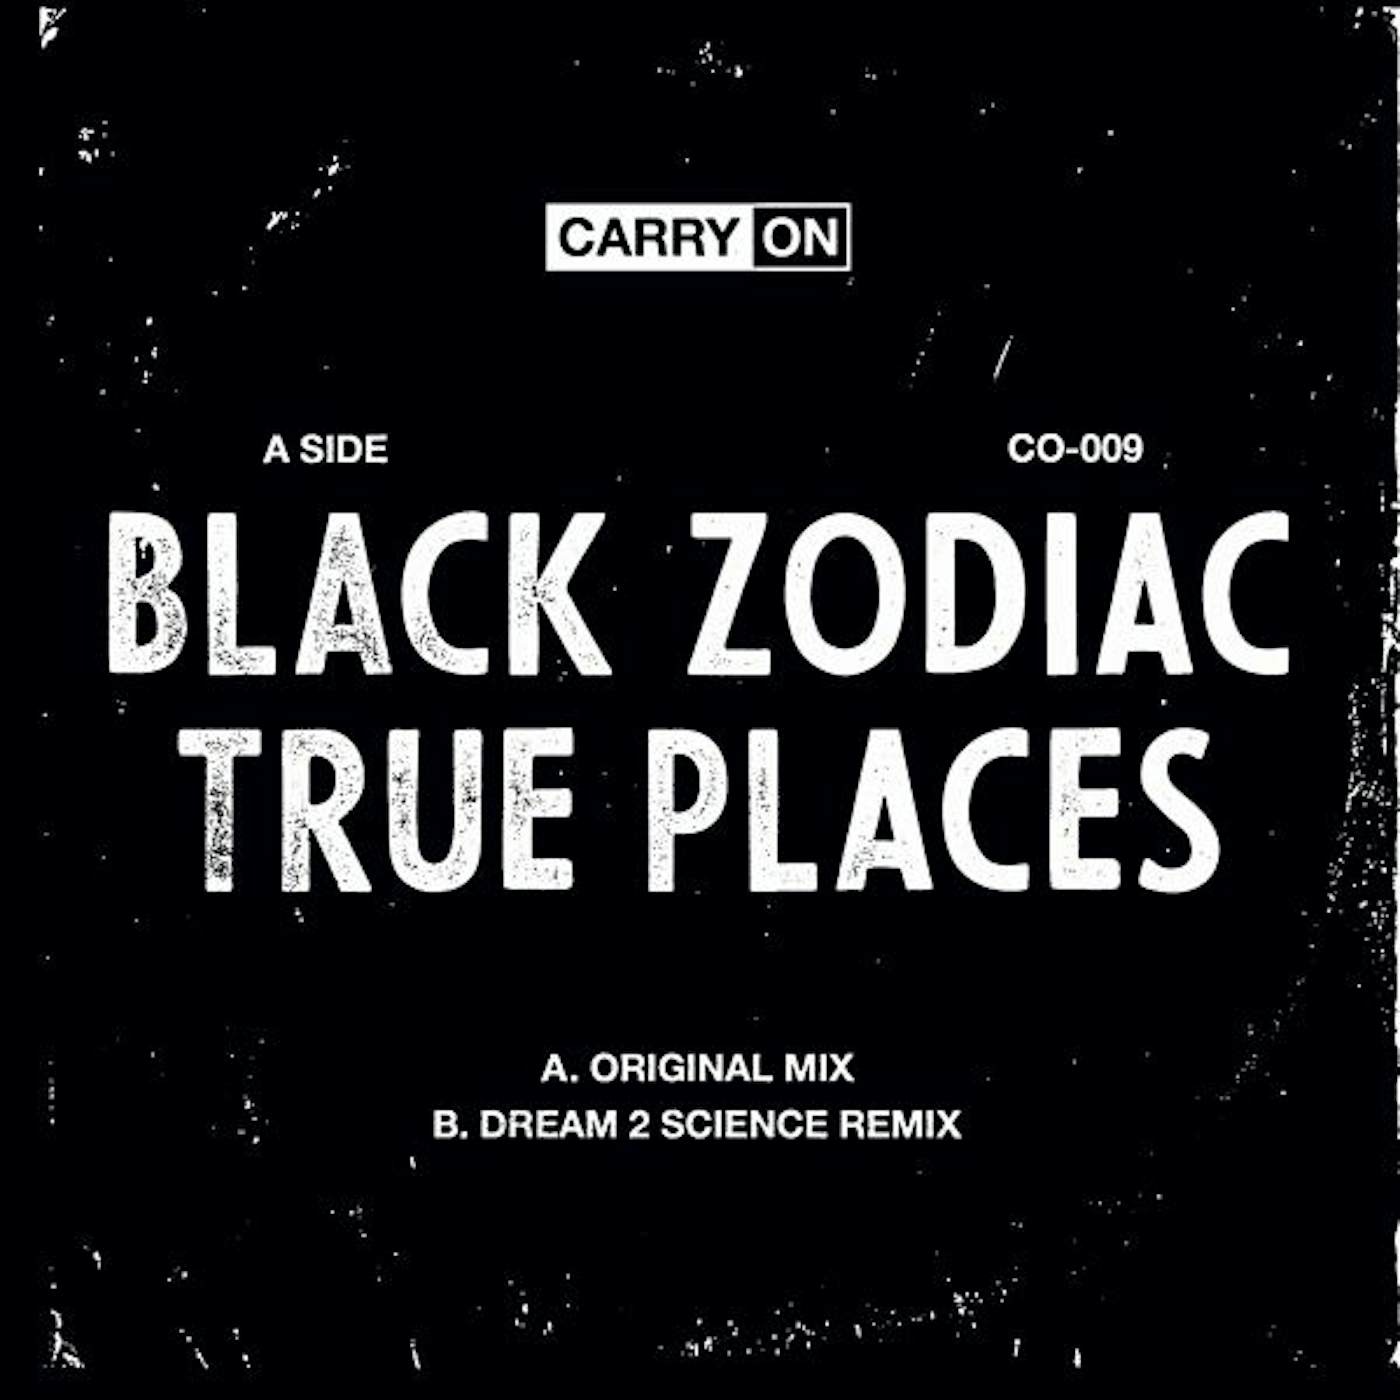 Black Zodiac TRUE PLACES Vinyl Record